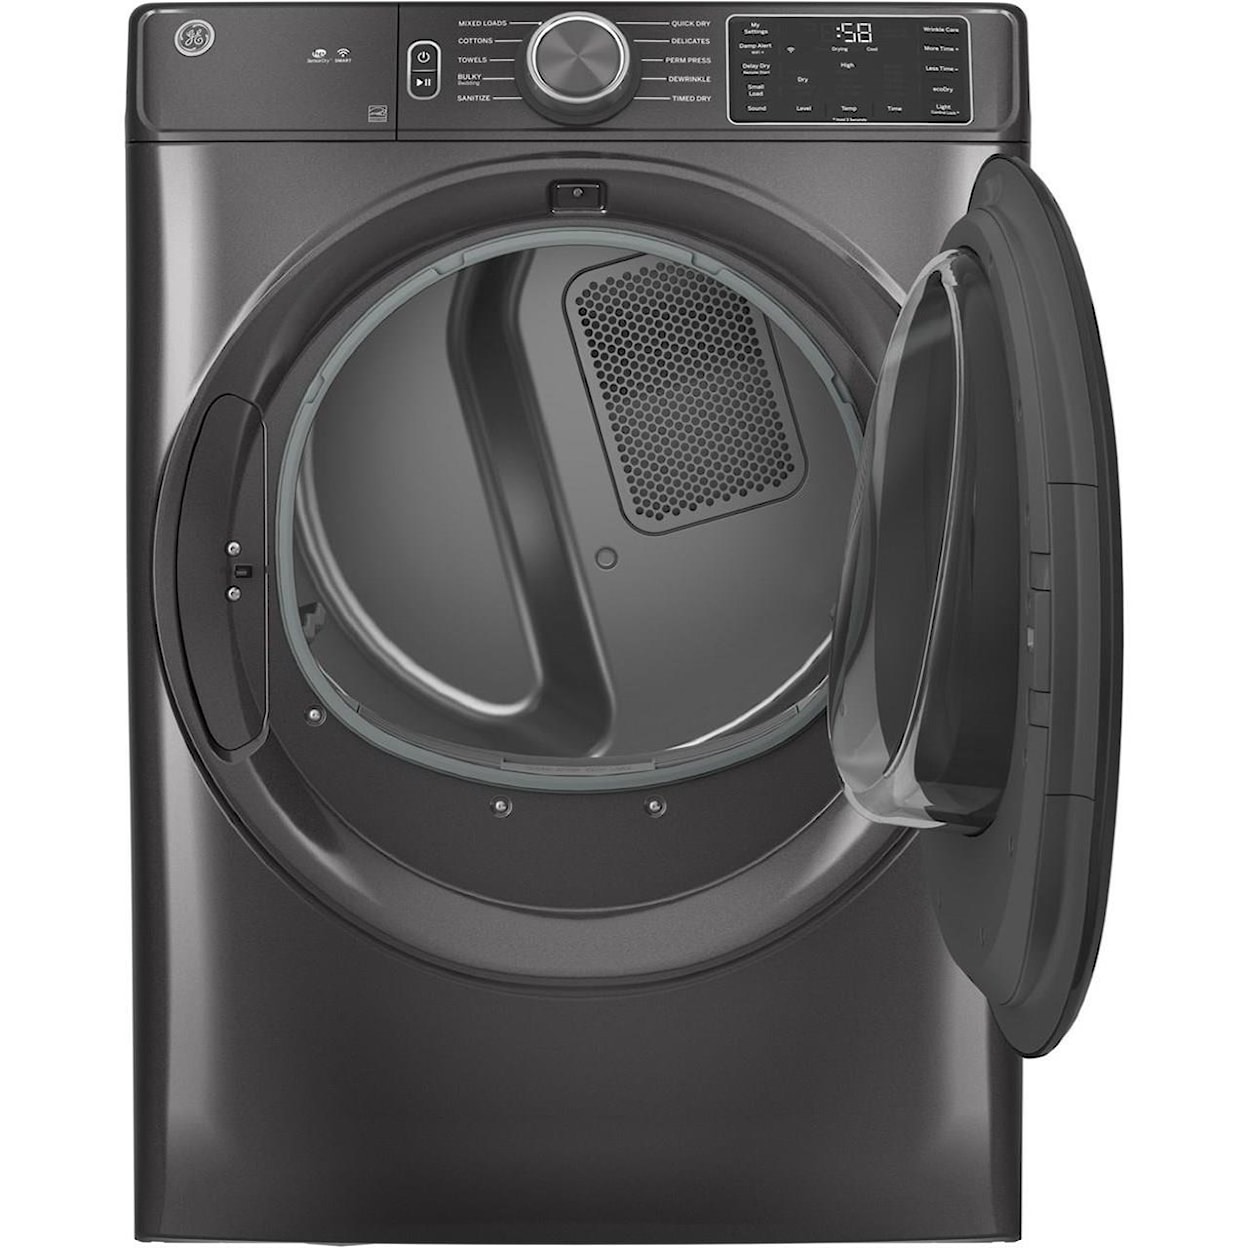 GE Appliances Home Laundry GE® 7.8 cu. ft. Capacity Smart Gas Dryer